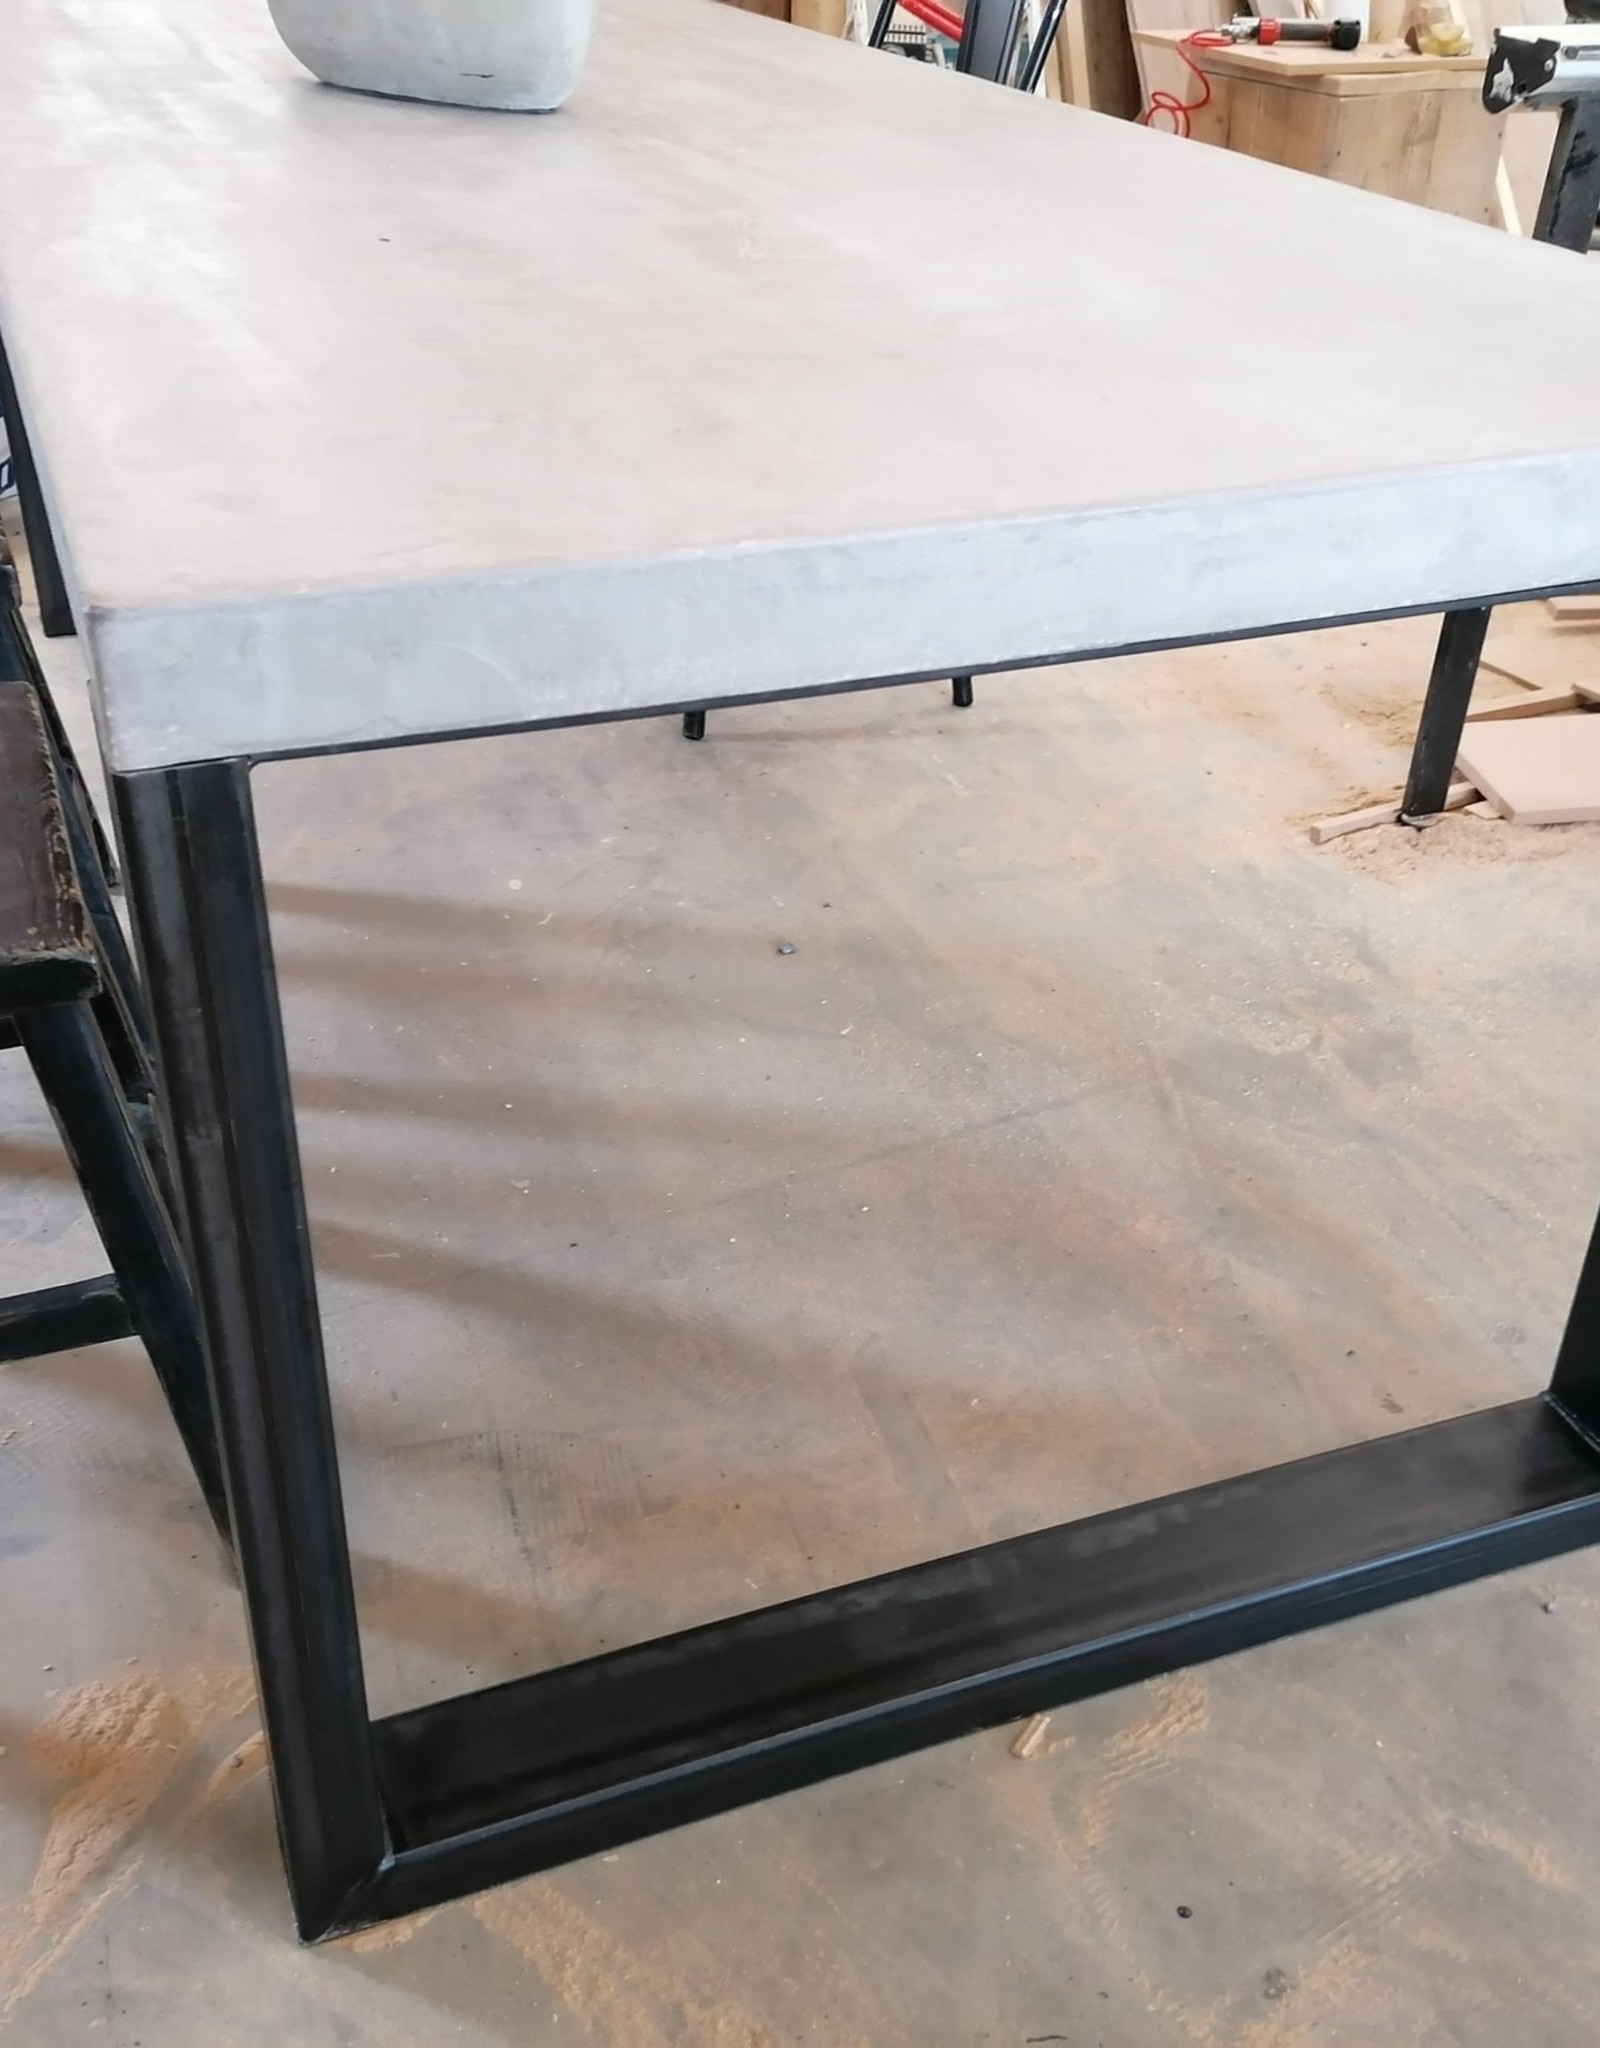 Mortex Concrete Stucco Table Metall Legs